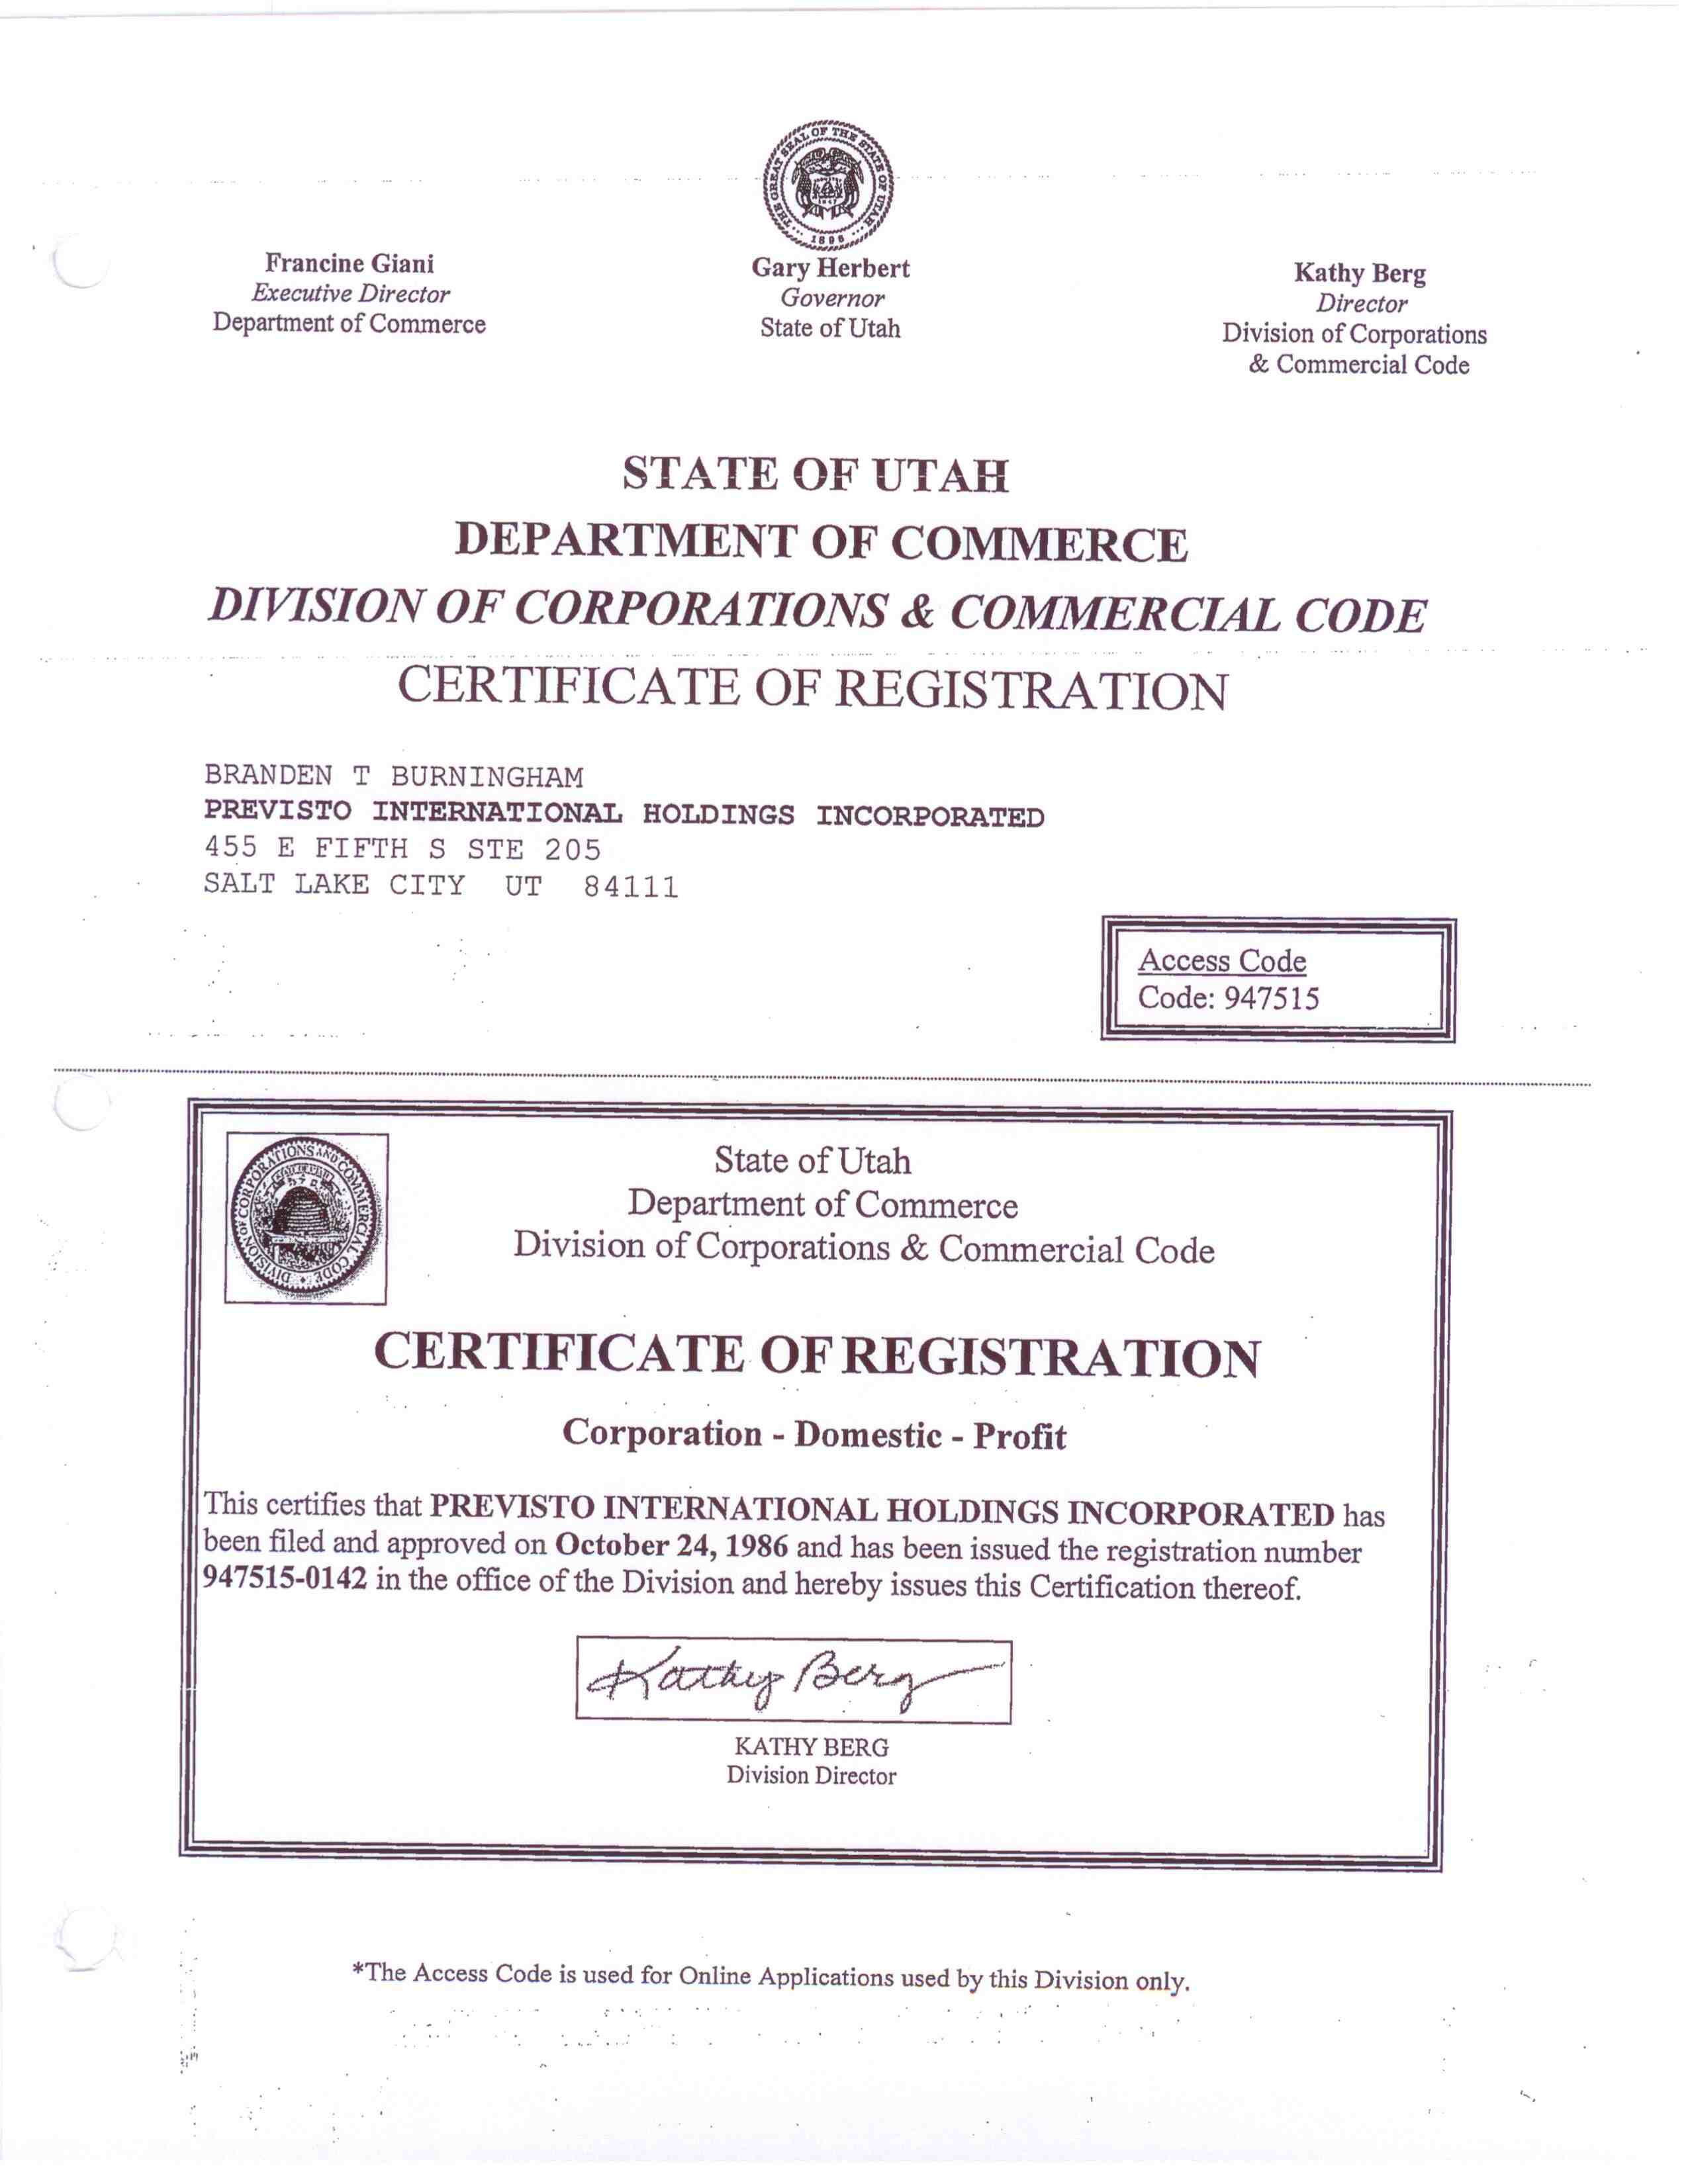 State of Utah - Certificate of Registration.